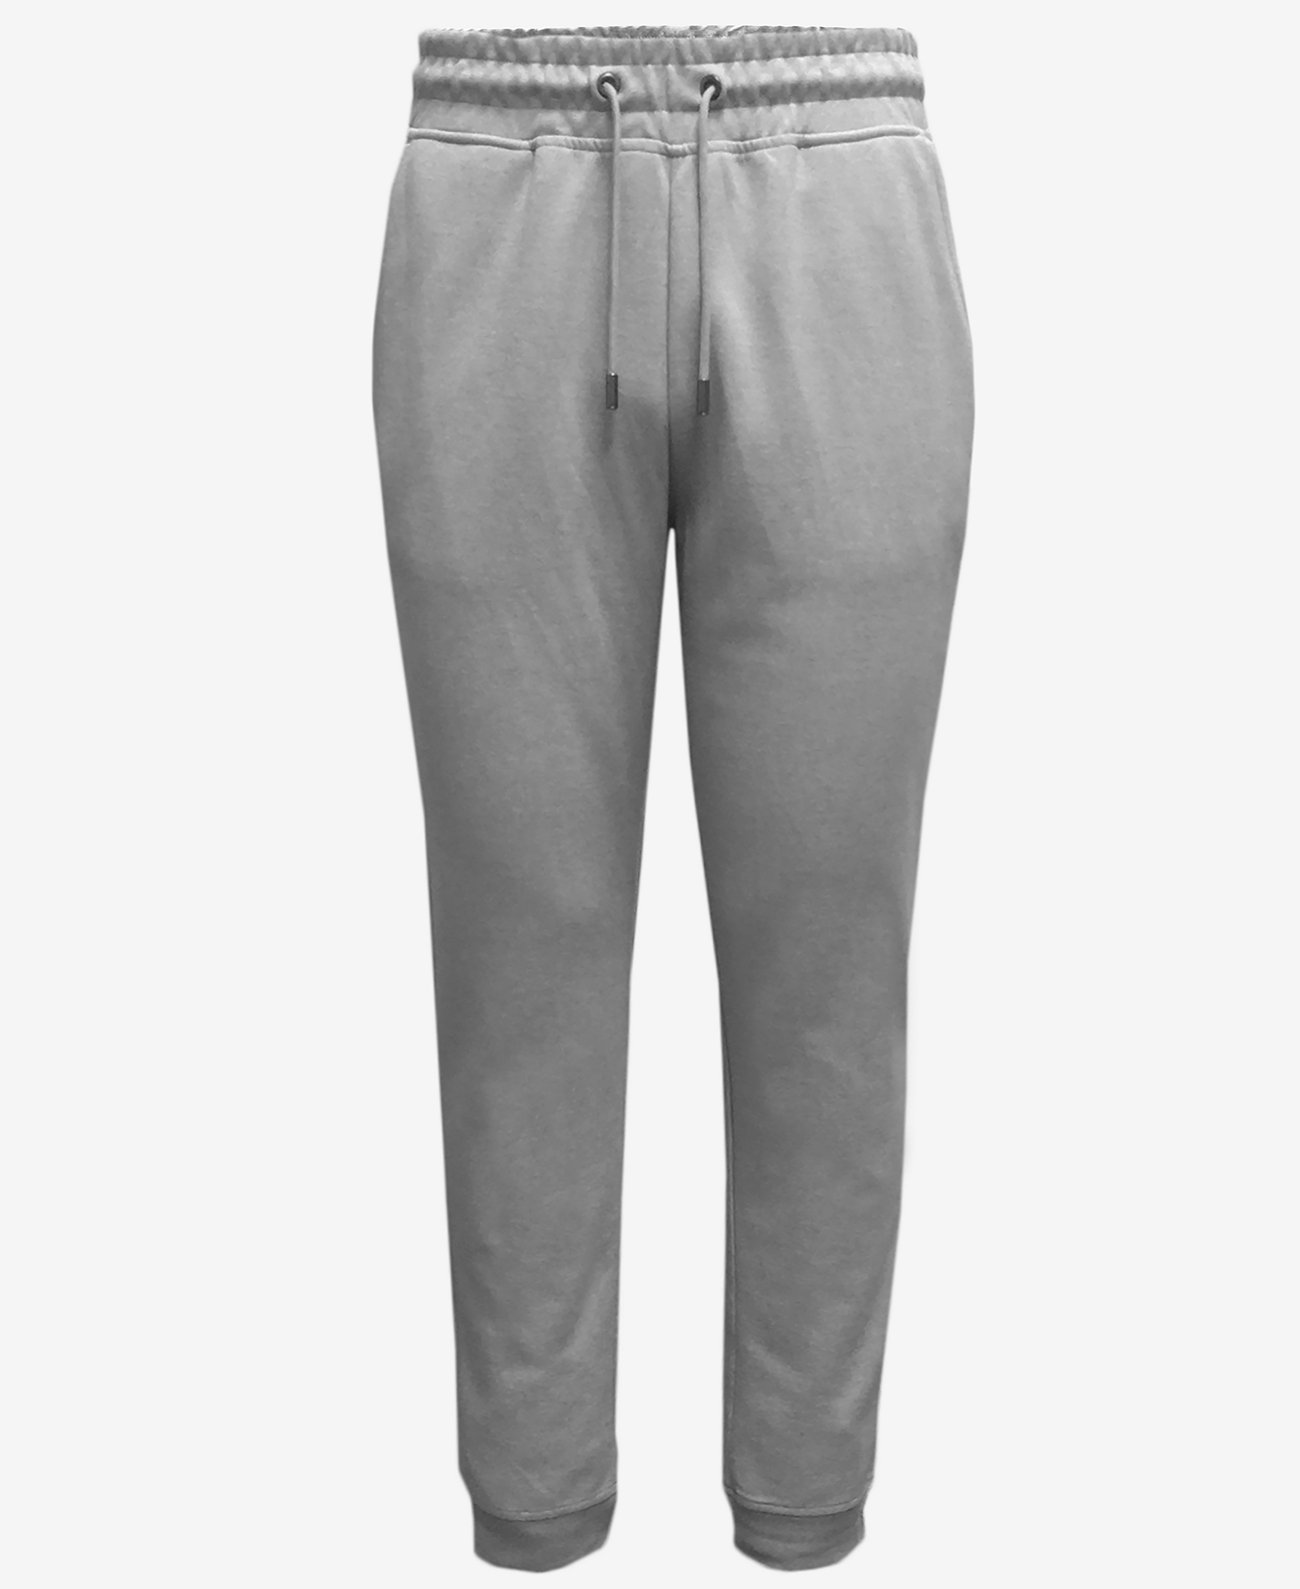 Men's Drawstring Jogger Pants, Created for Macy's Alfani